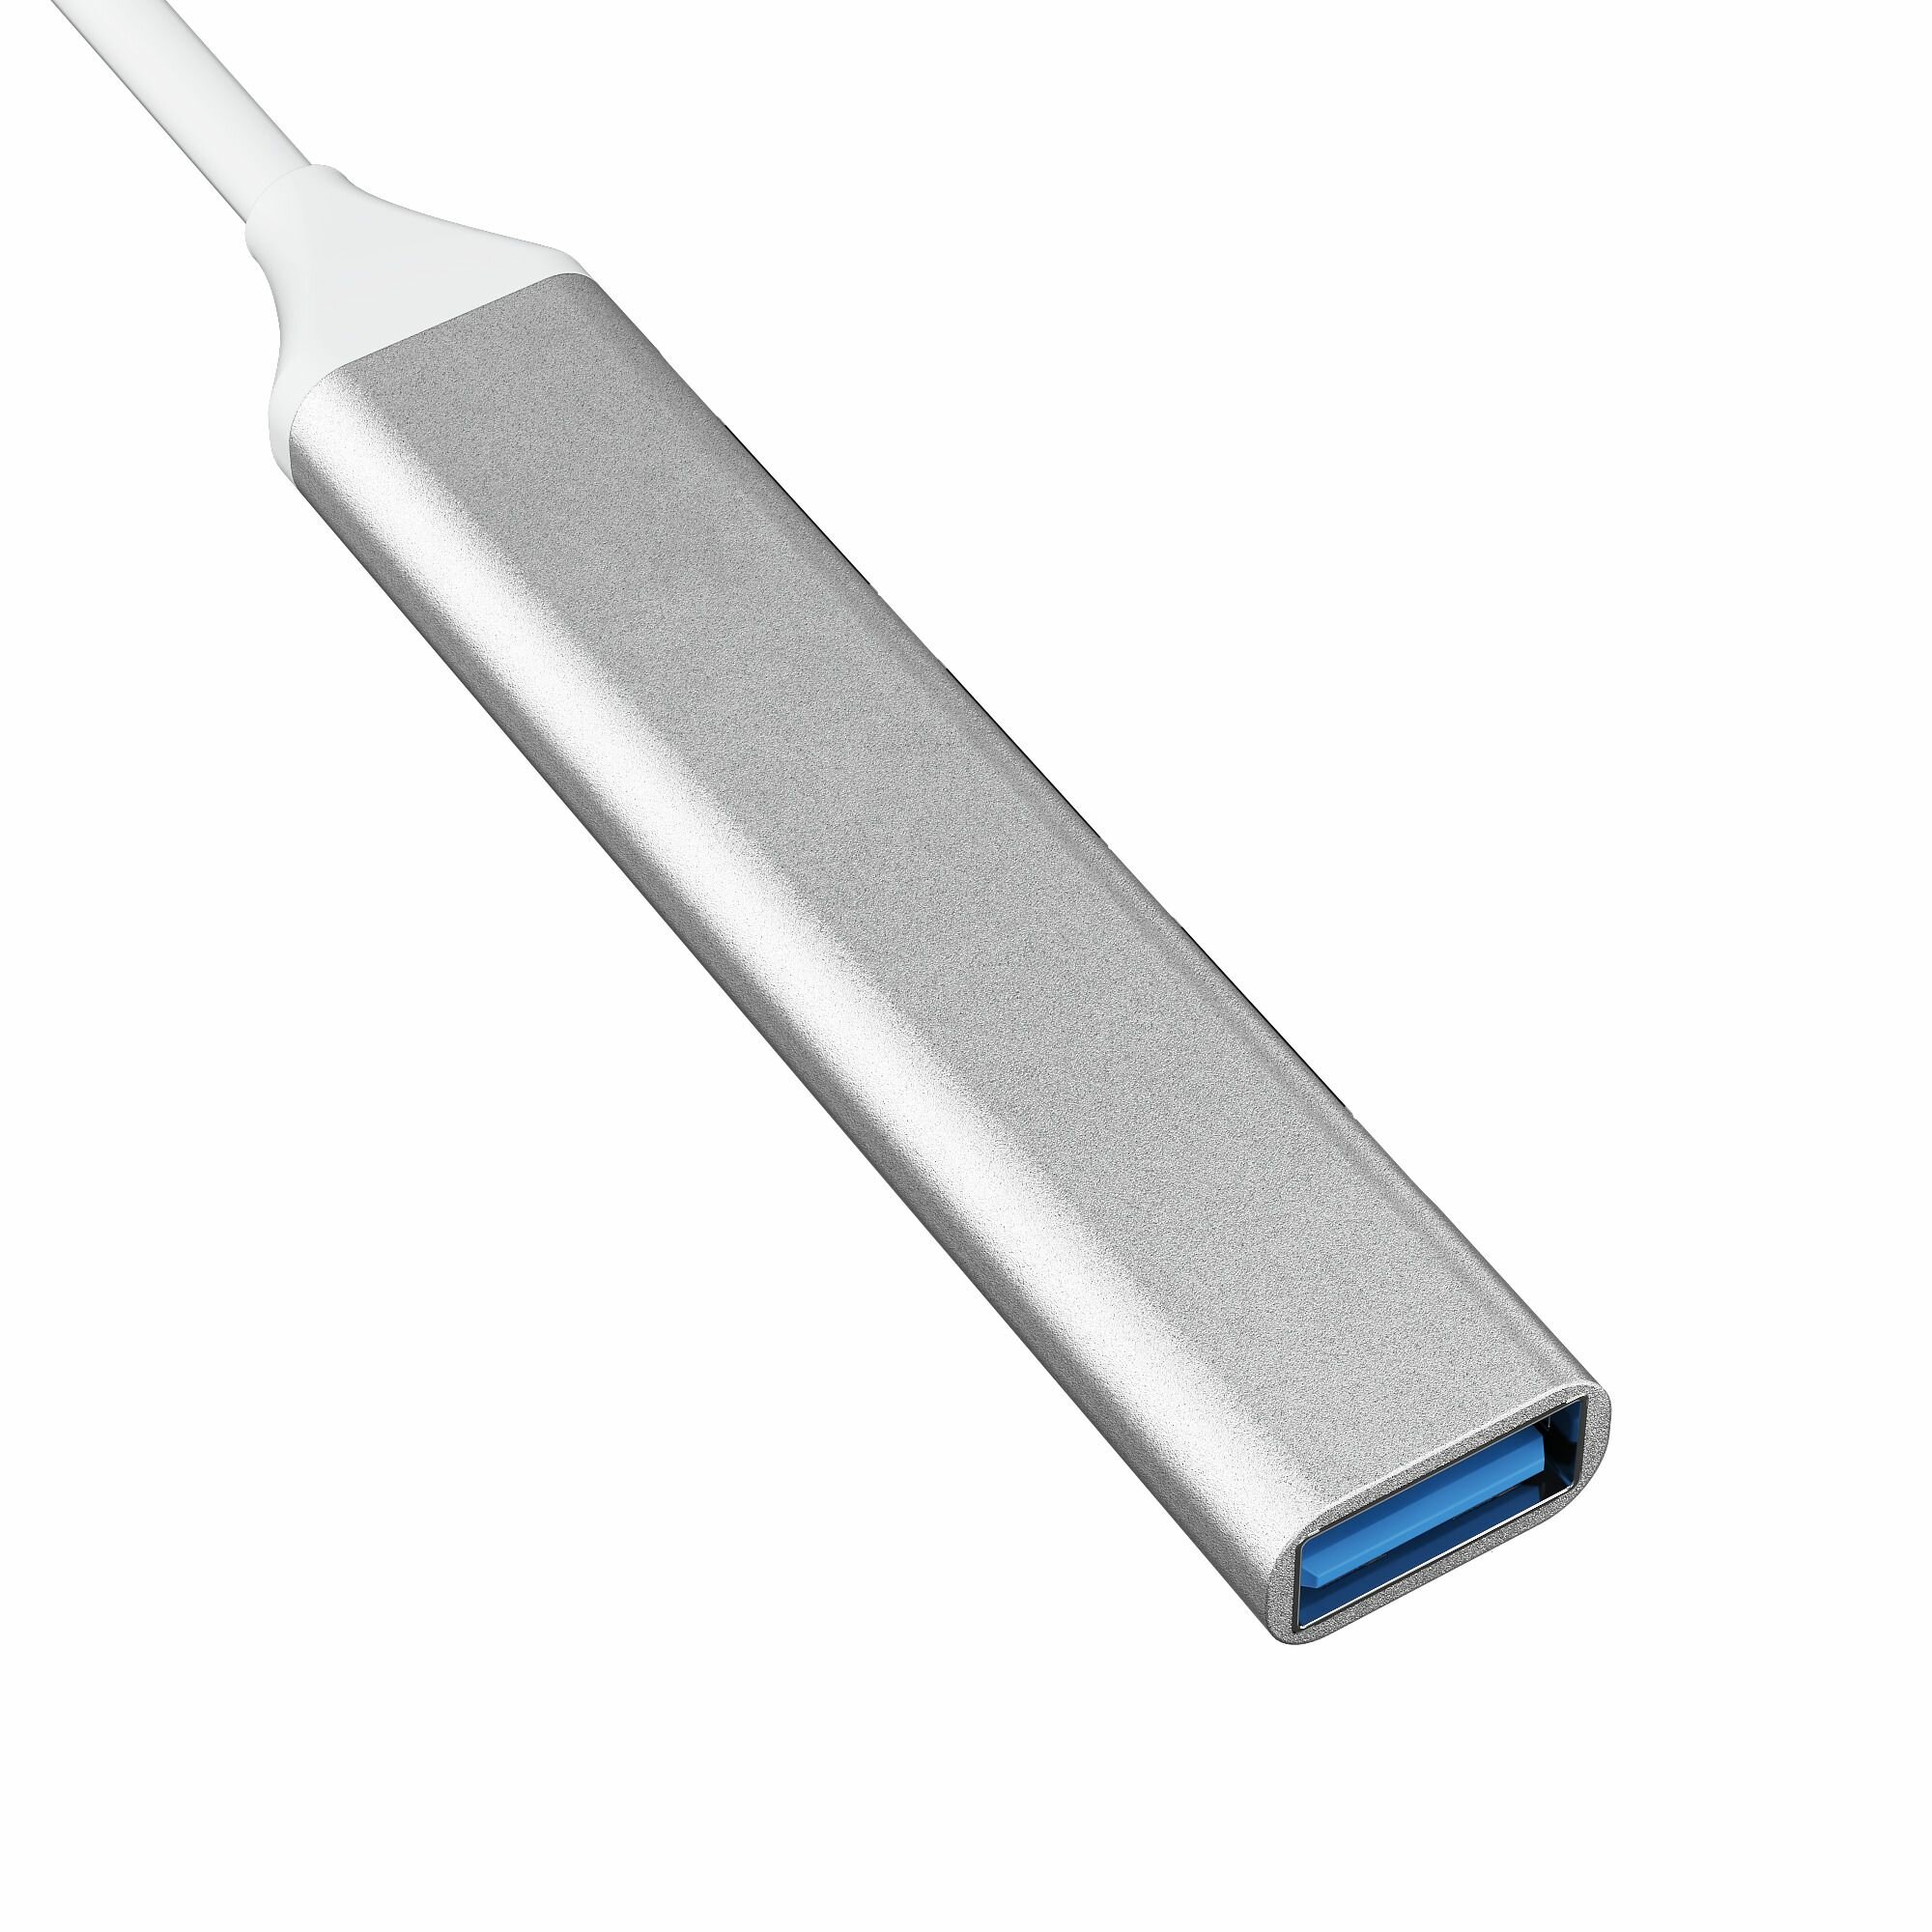 USB 2.0 концентратор, разветвитель, хаб GSMIN B15B 4x USB 2.0 переходник, адаптер (23 см) (Серебристый)